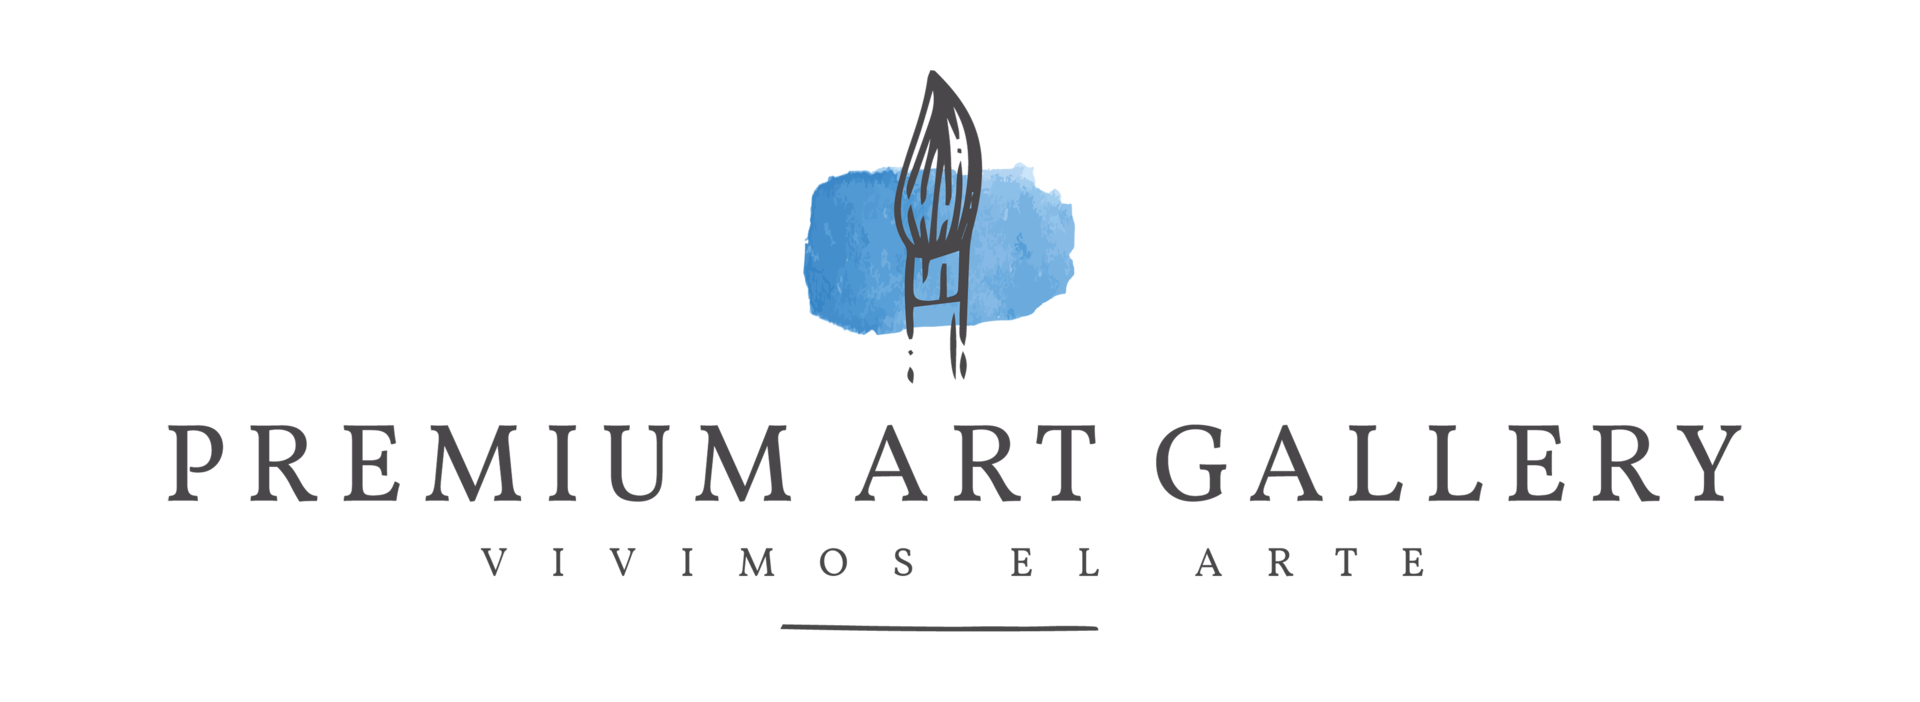 Buy Authentic Latin American Art Online at Premium Art Gallery